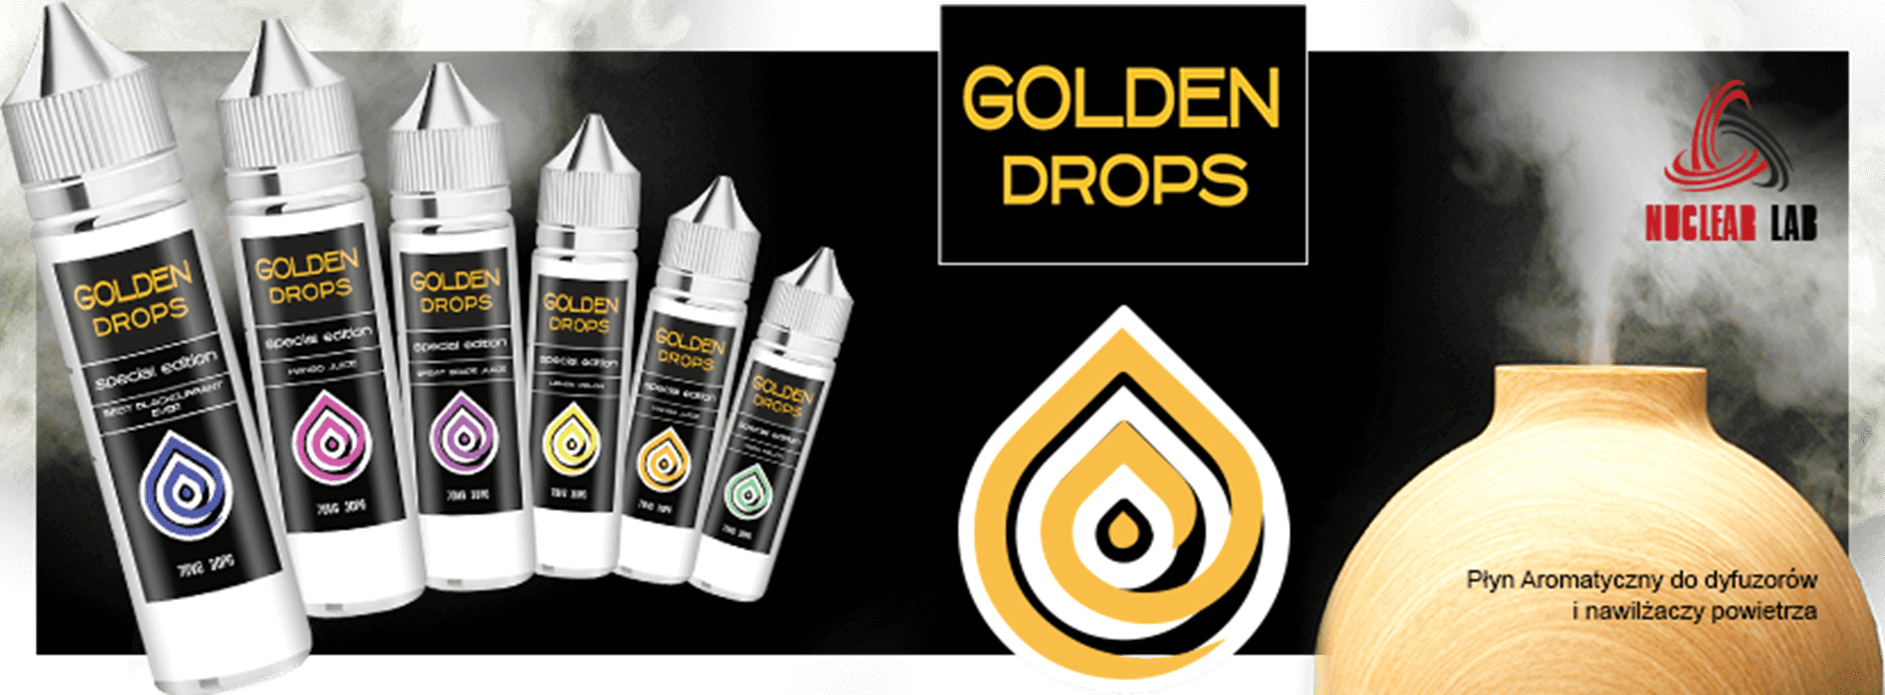 golden-drops-large